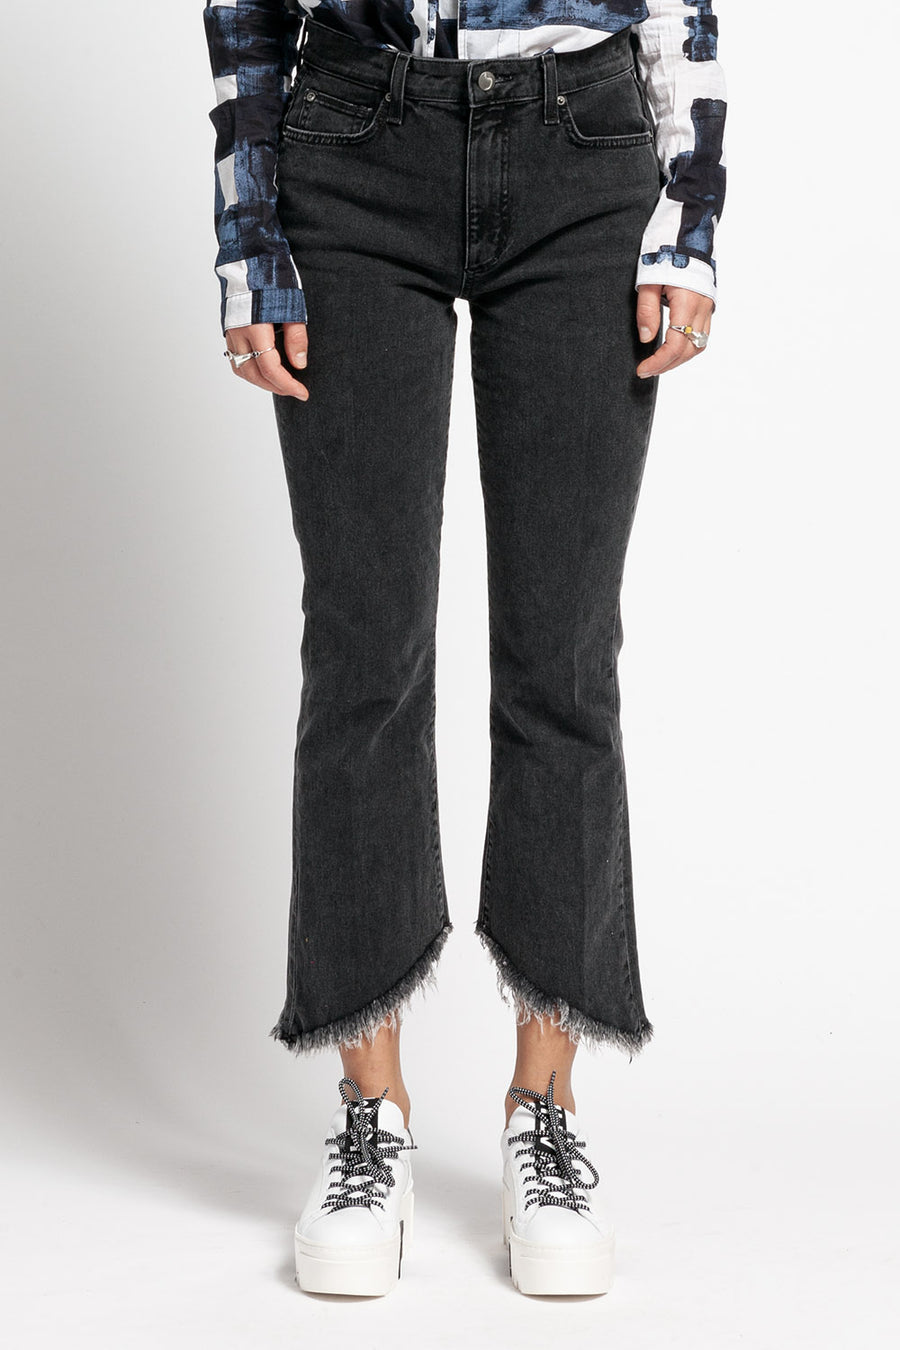 Pantalone jeans da donna nero CALLIE AUDREY